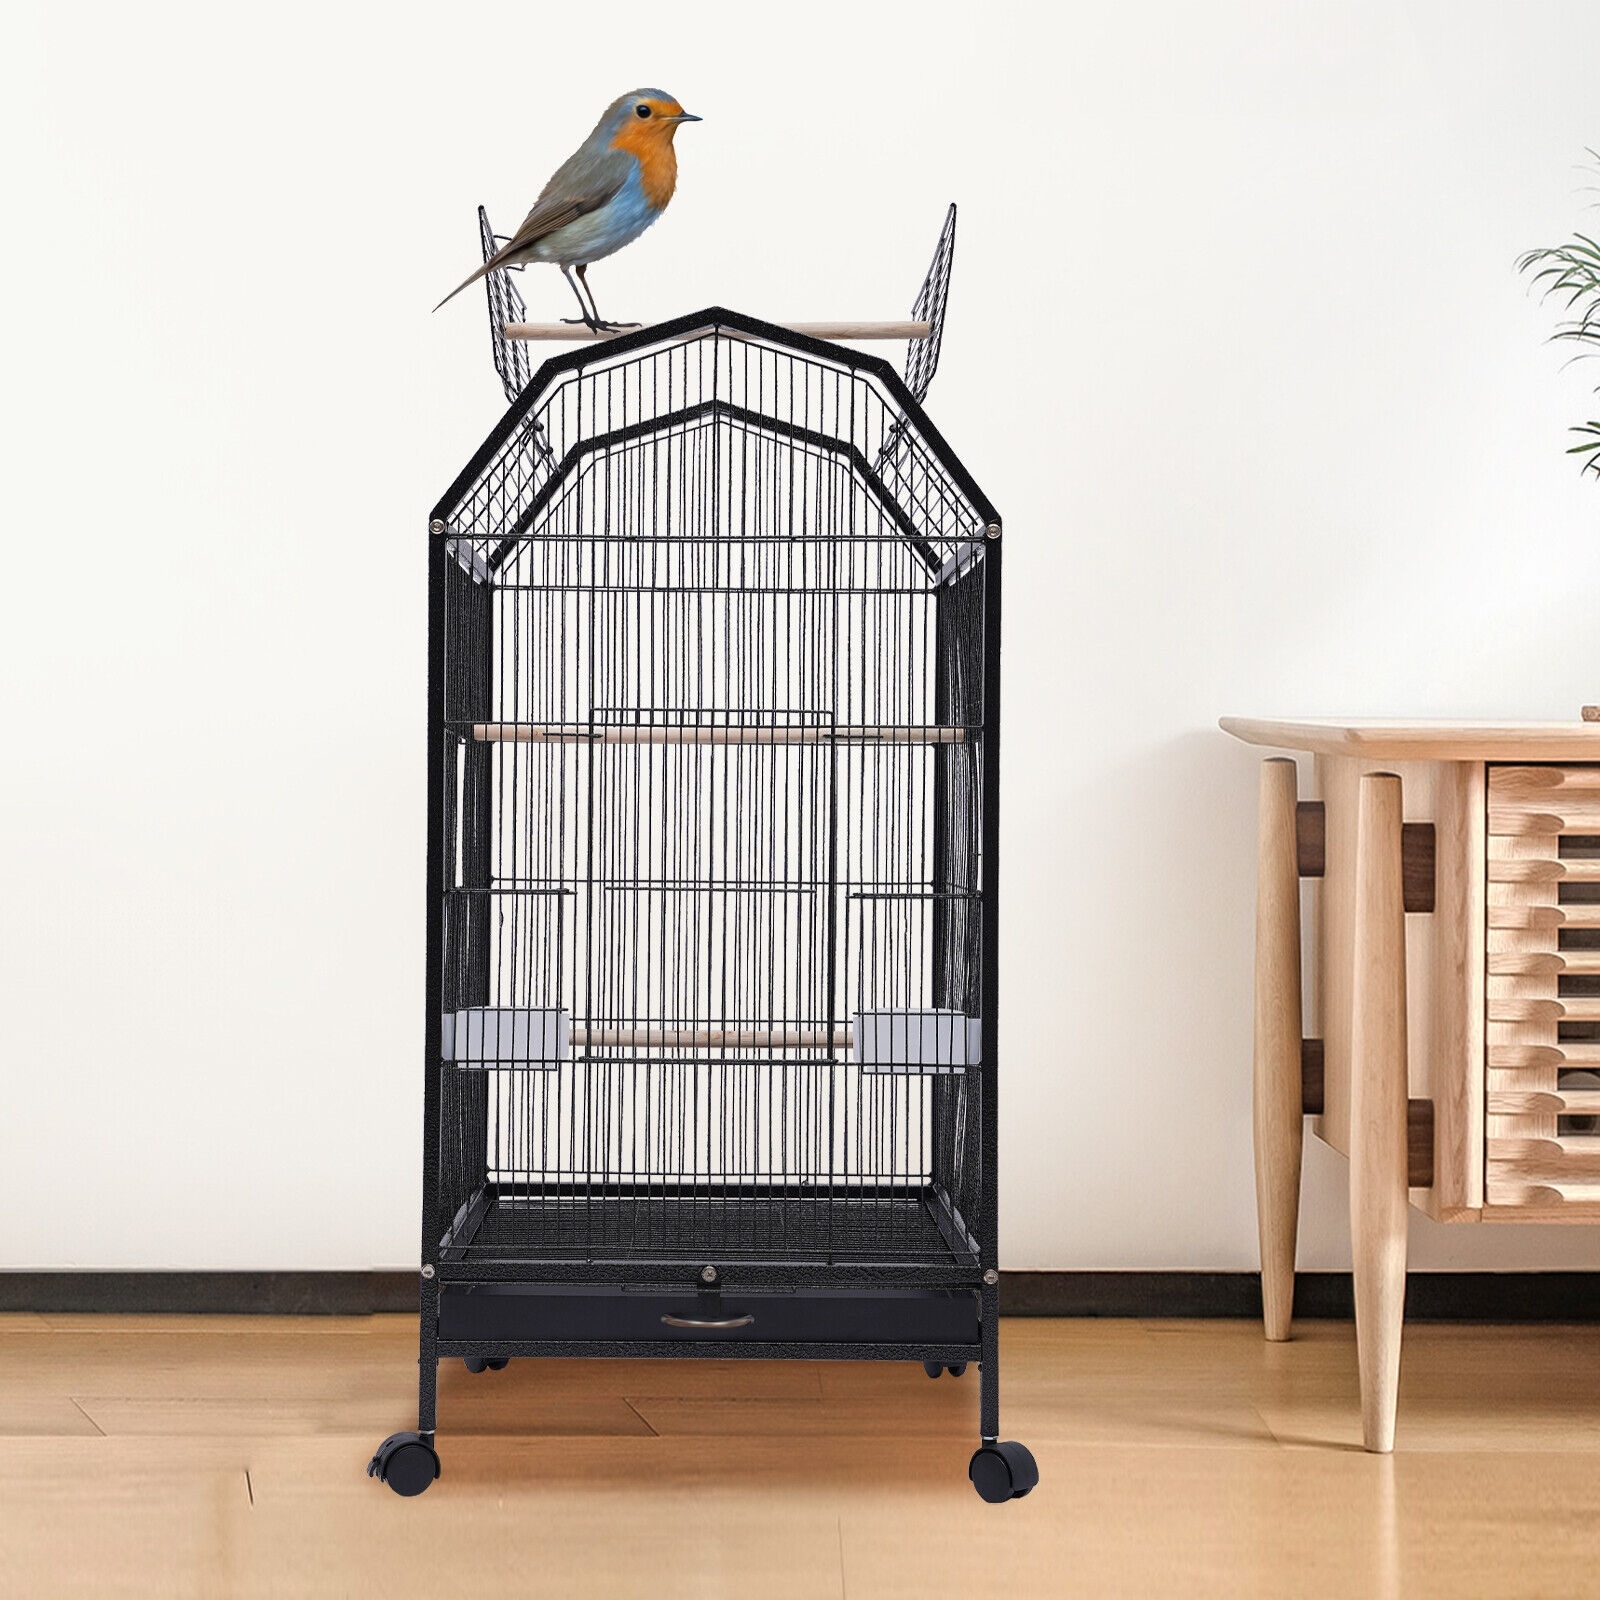 Decorative Bird Cages Handmade Home Decor - Bed Bath & Beyond